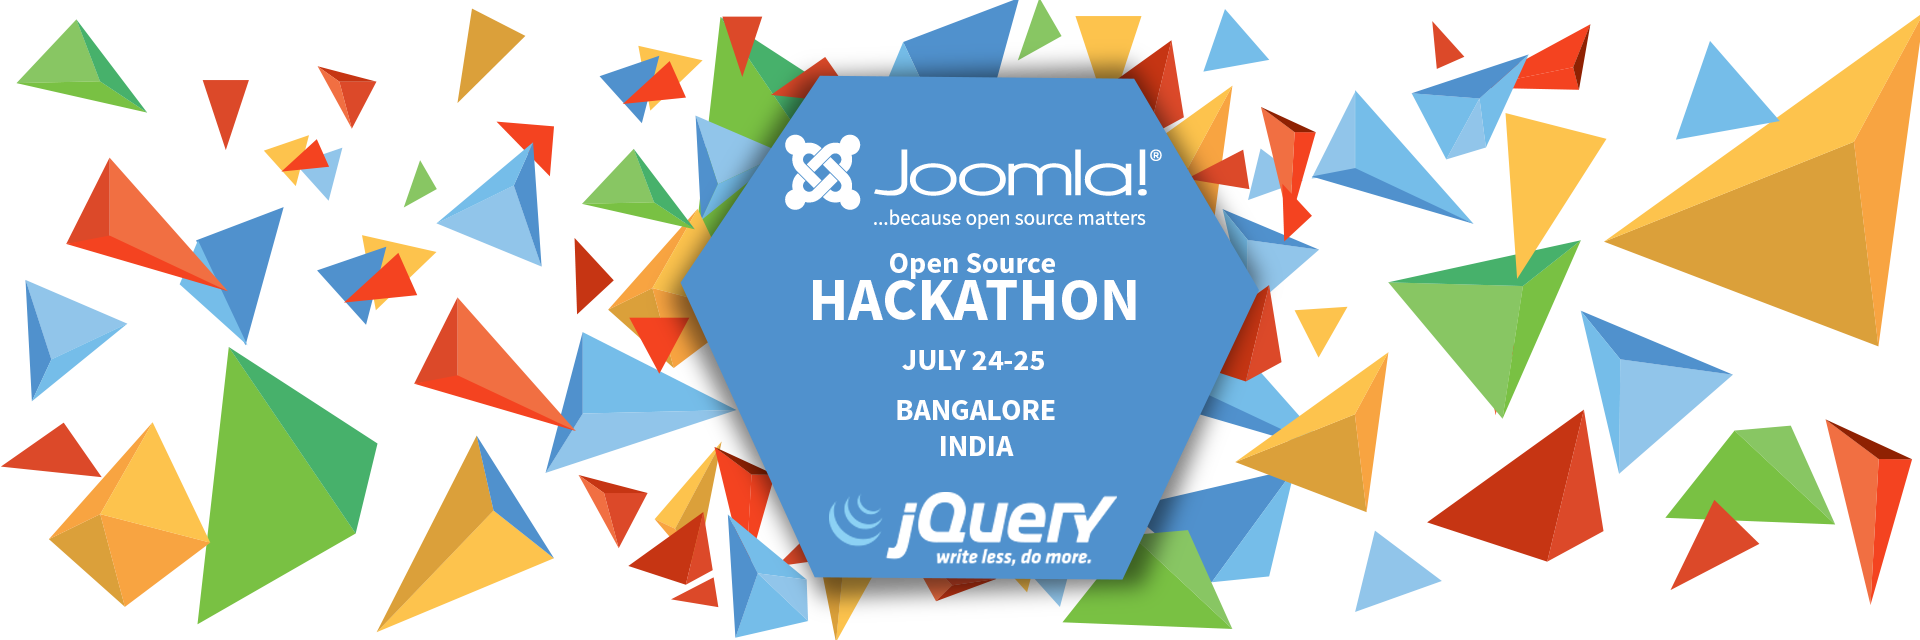 Joomla Hackathon July 24-25th 2015